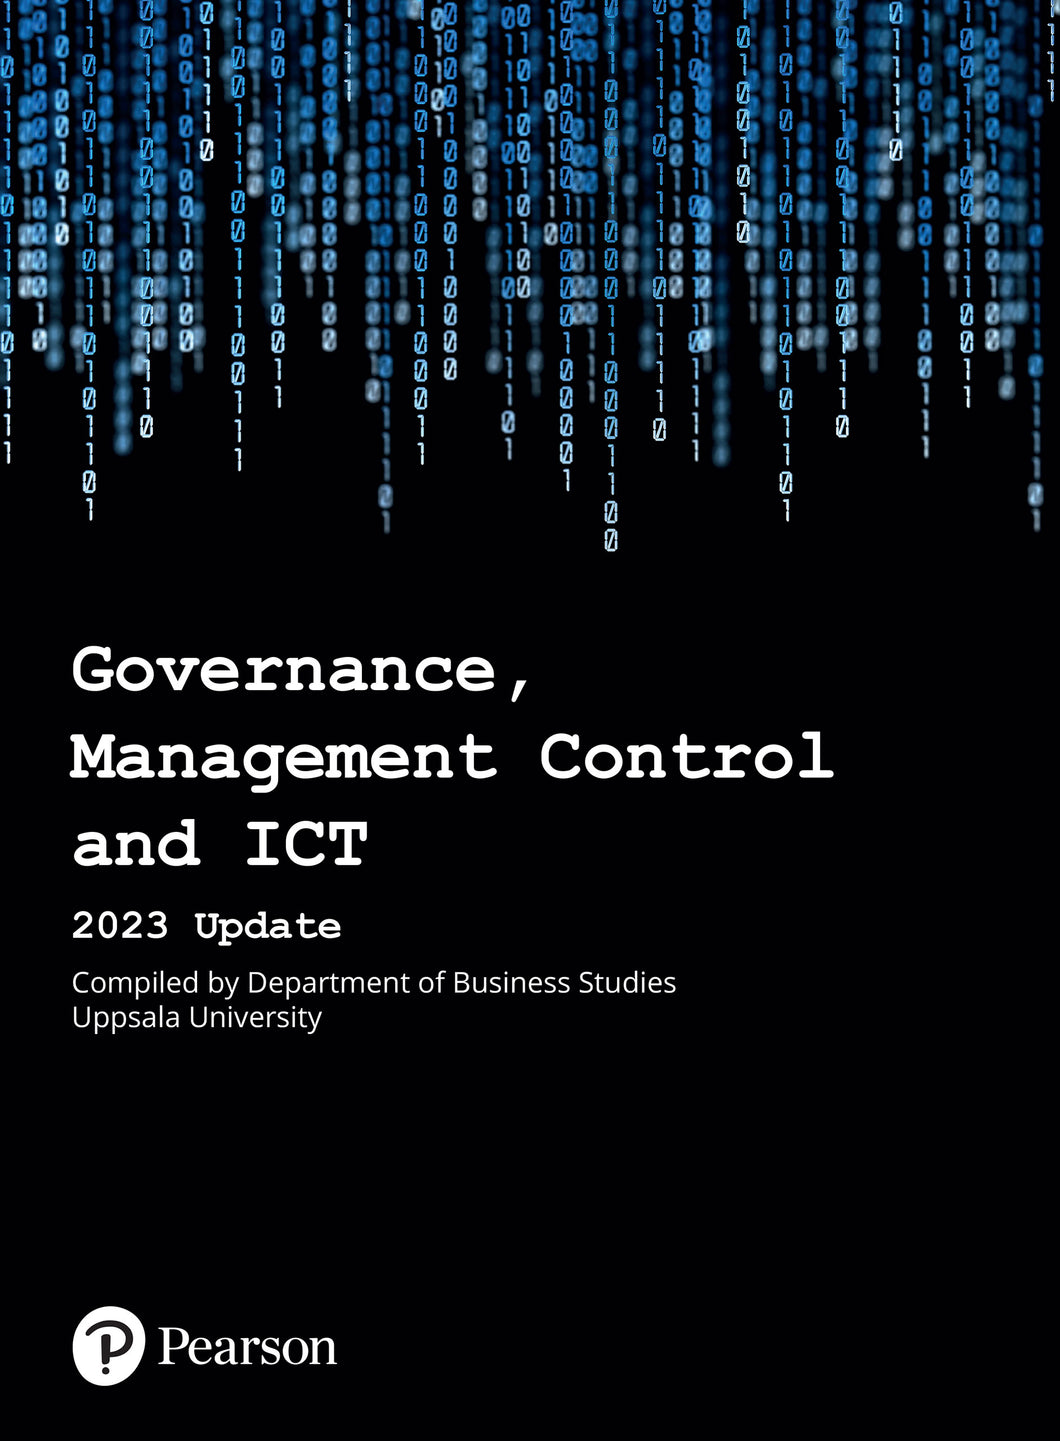 Governance, Management Control, and ICT 2023 Update- Uppsala Universitet, e-book